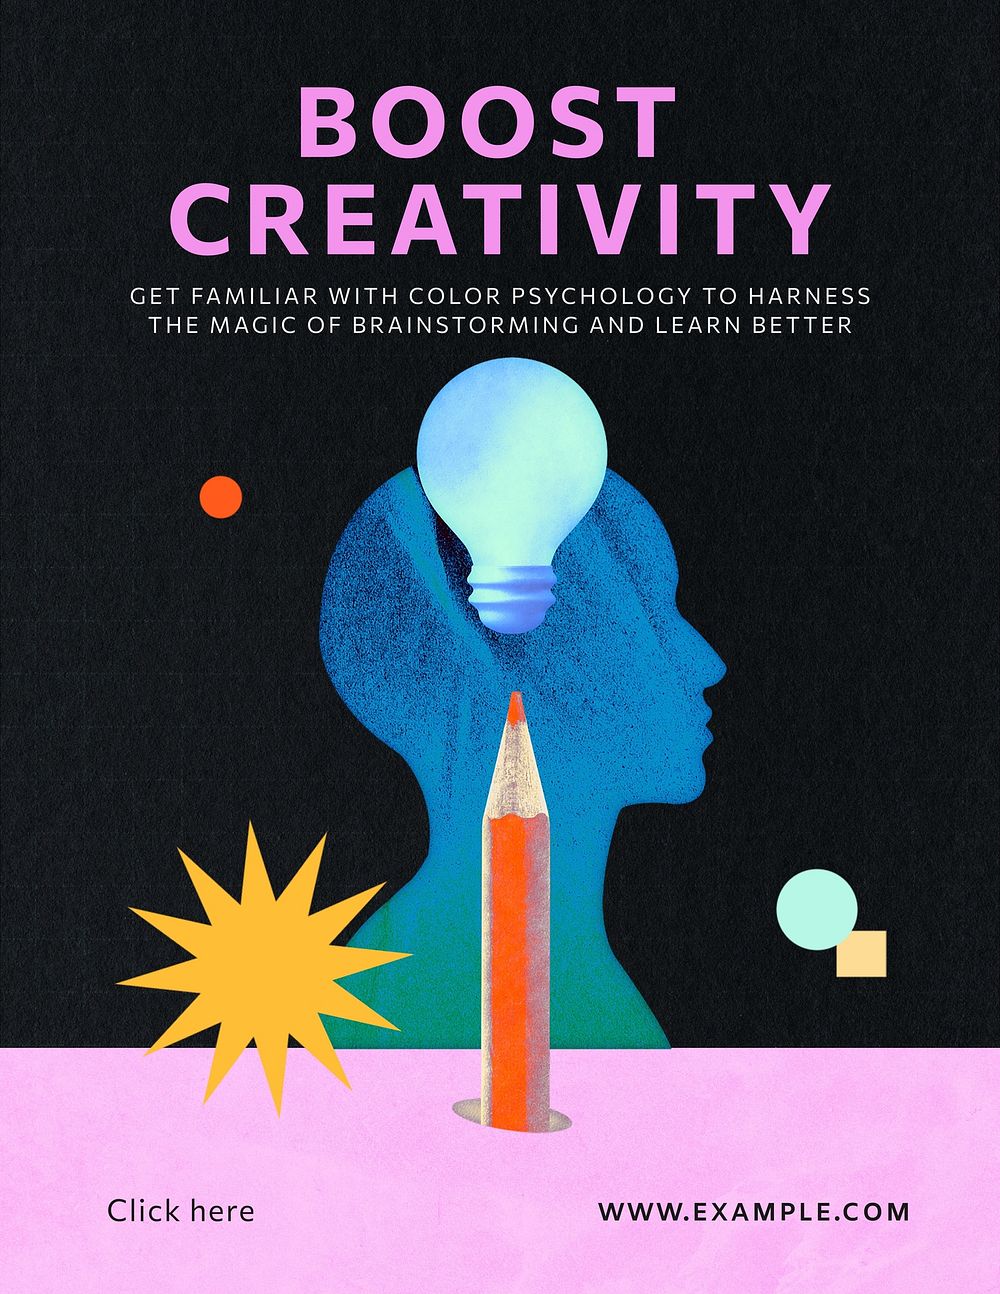 Boost creativity flyer template